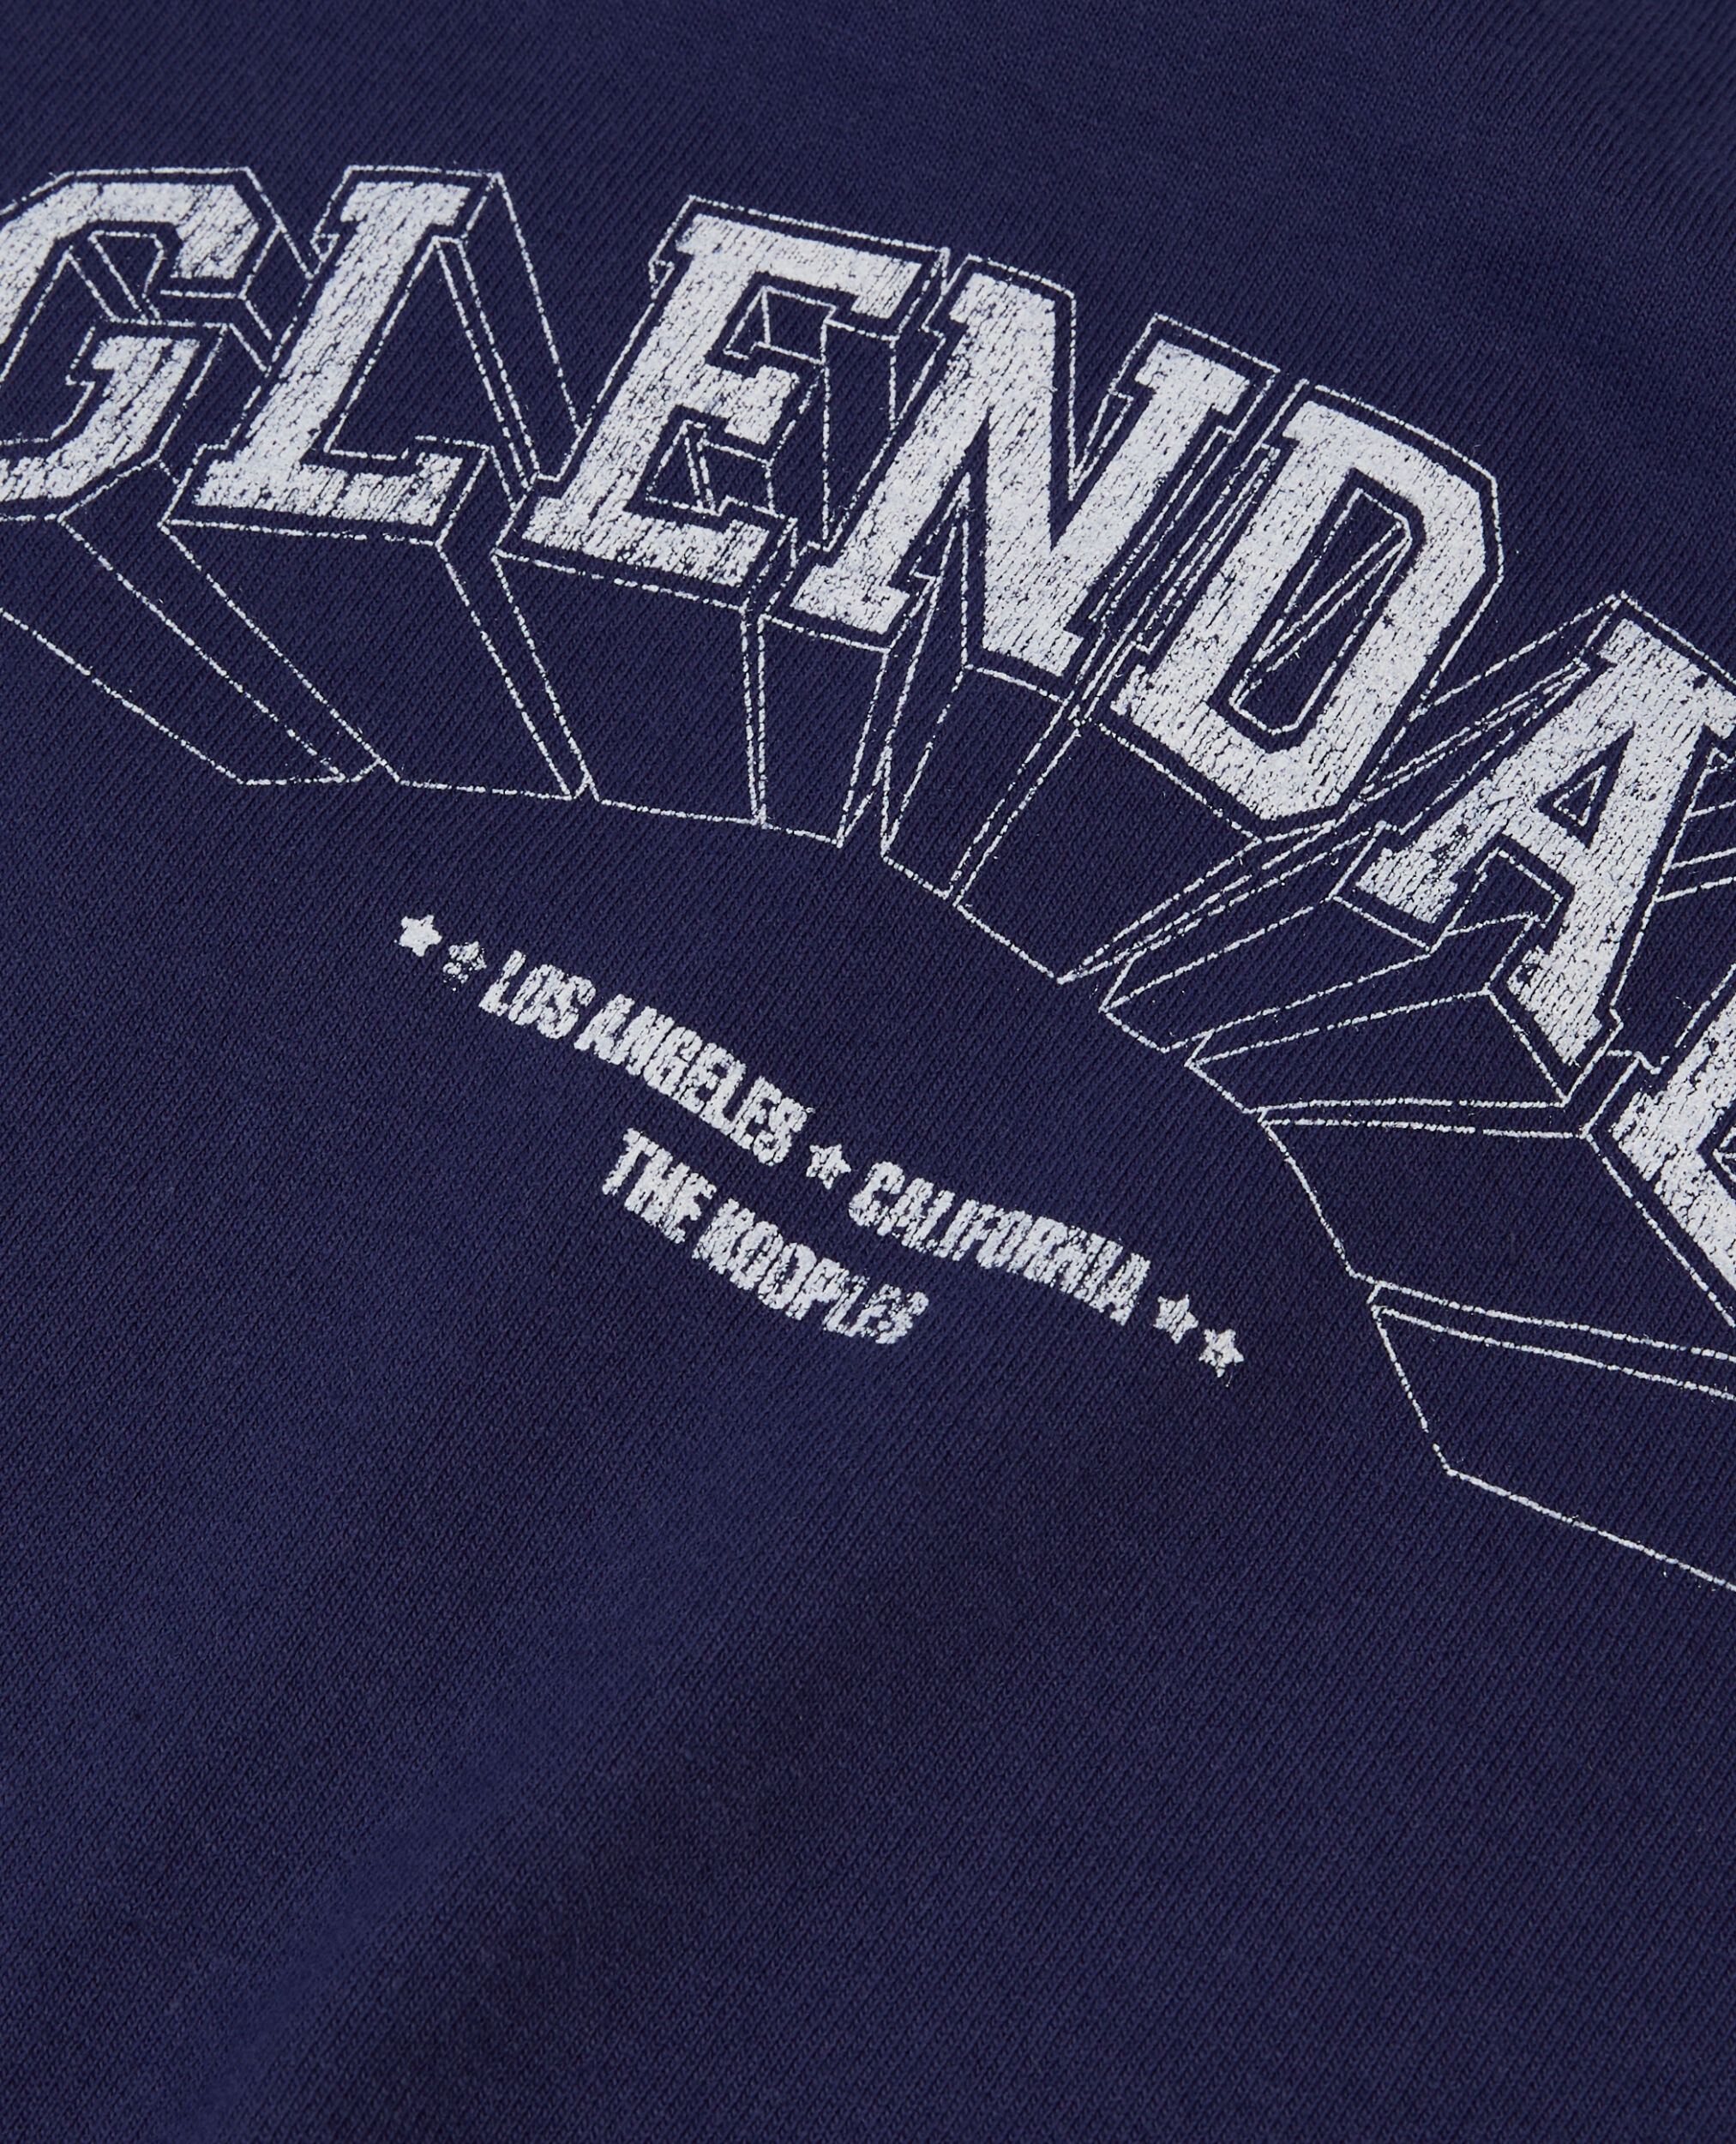 Marineblaues T-Shirt mit Glendale-Siebdruck, WASHED NAVY, hi-res image number null